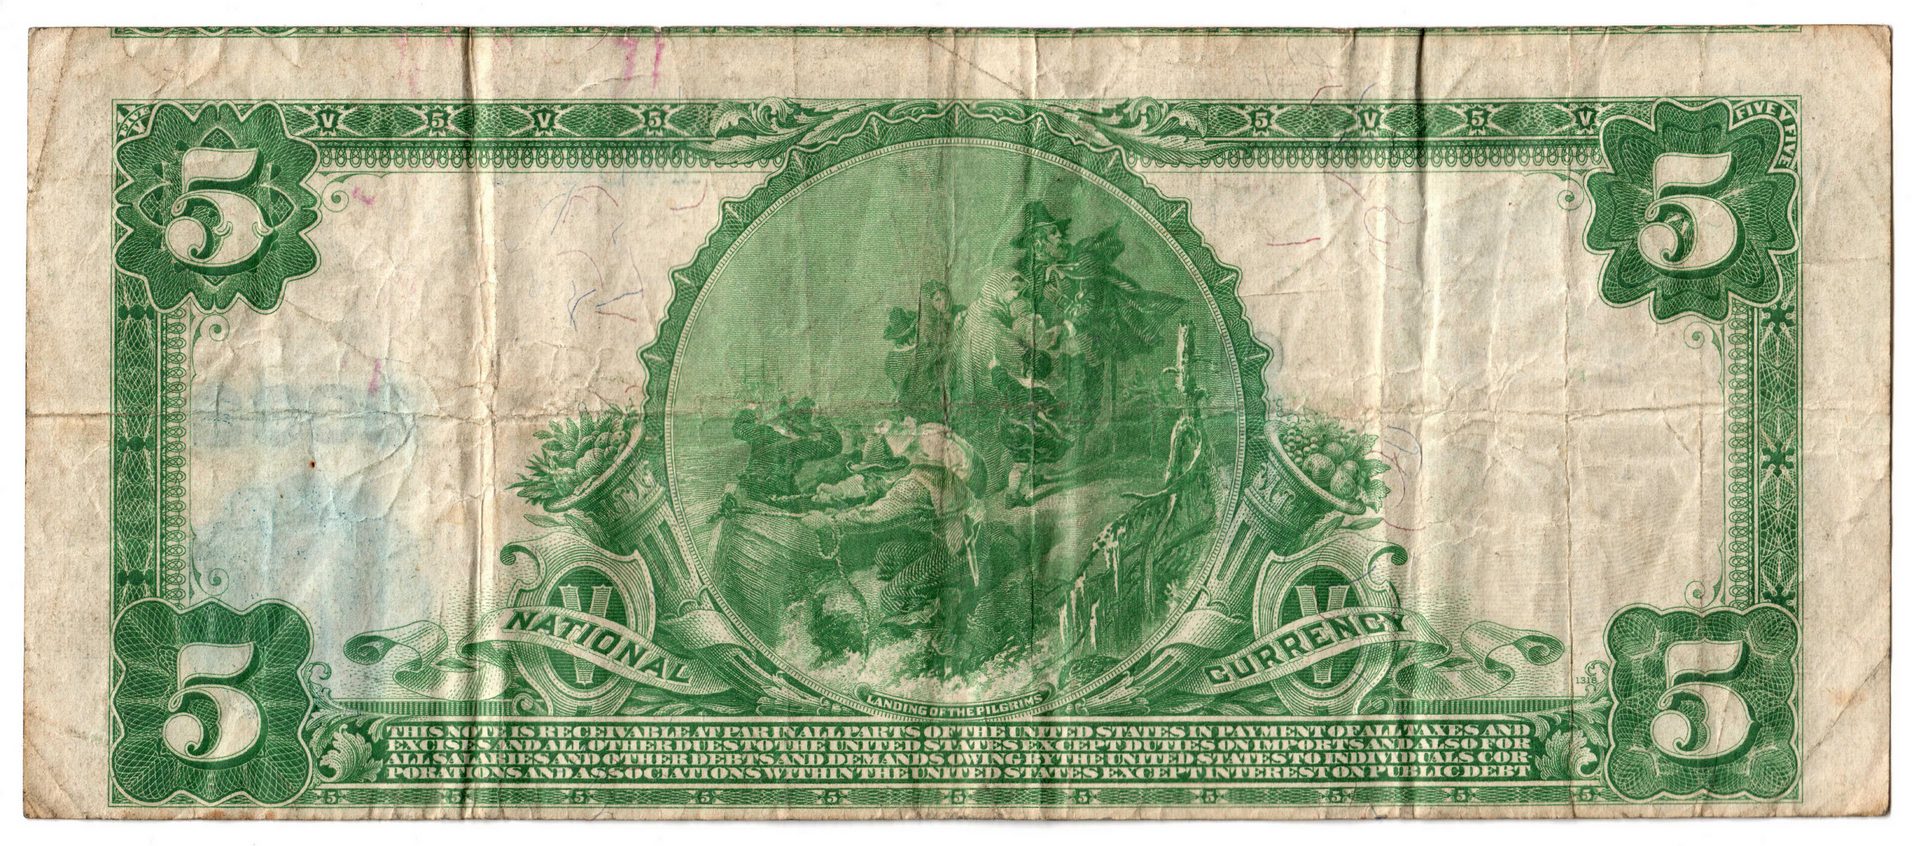 Lot 881: 1902 $5 American National Bank of Nashville